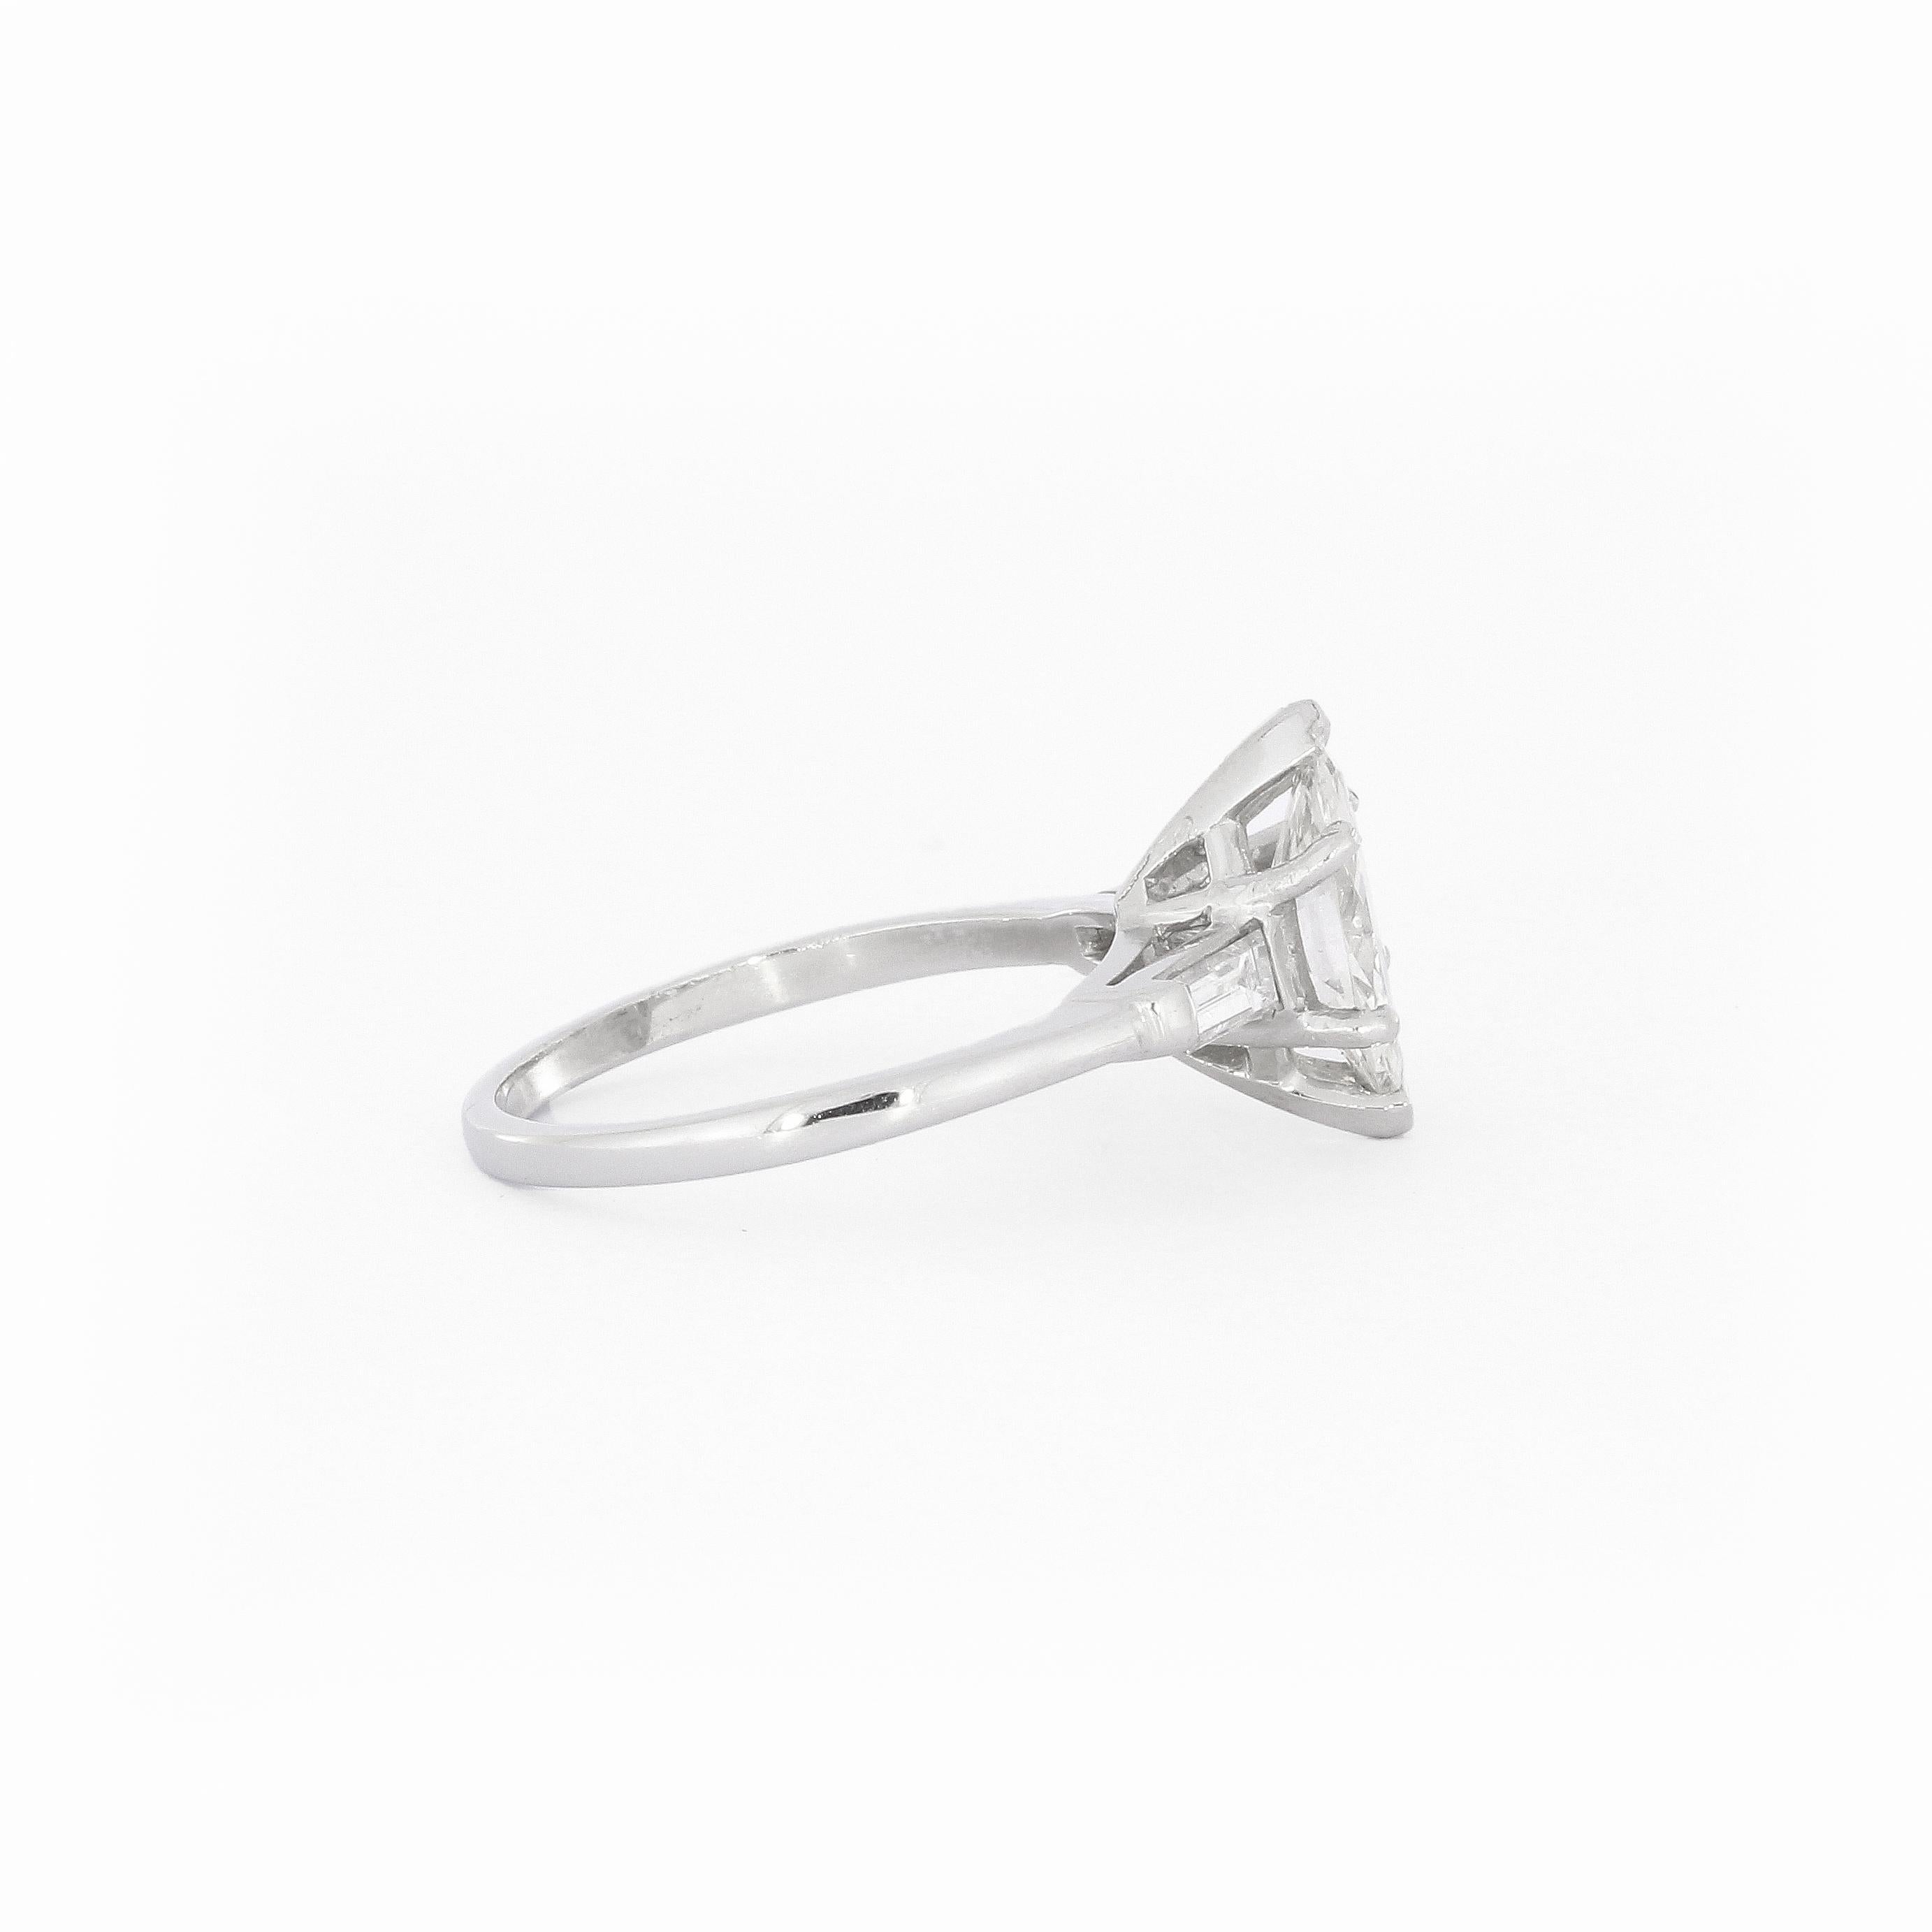 Marquise Cut 1.01 Carat Diamond Solitaire Ring in Platinum For Sale 2